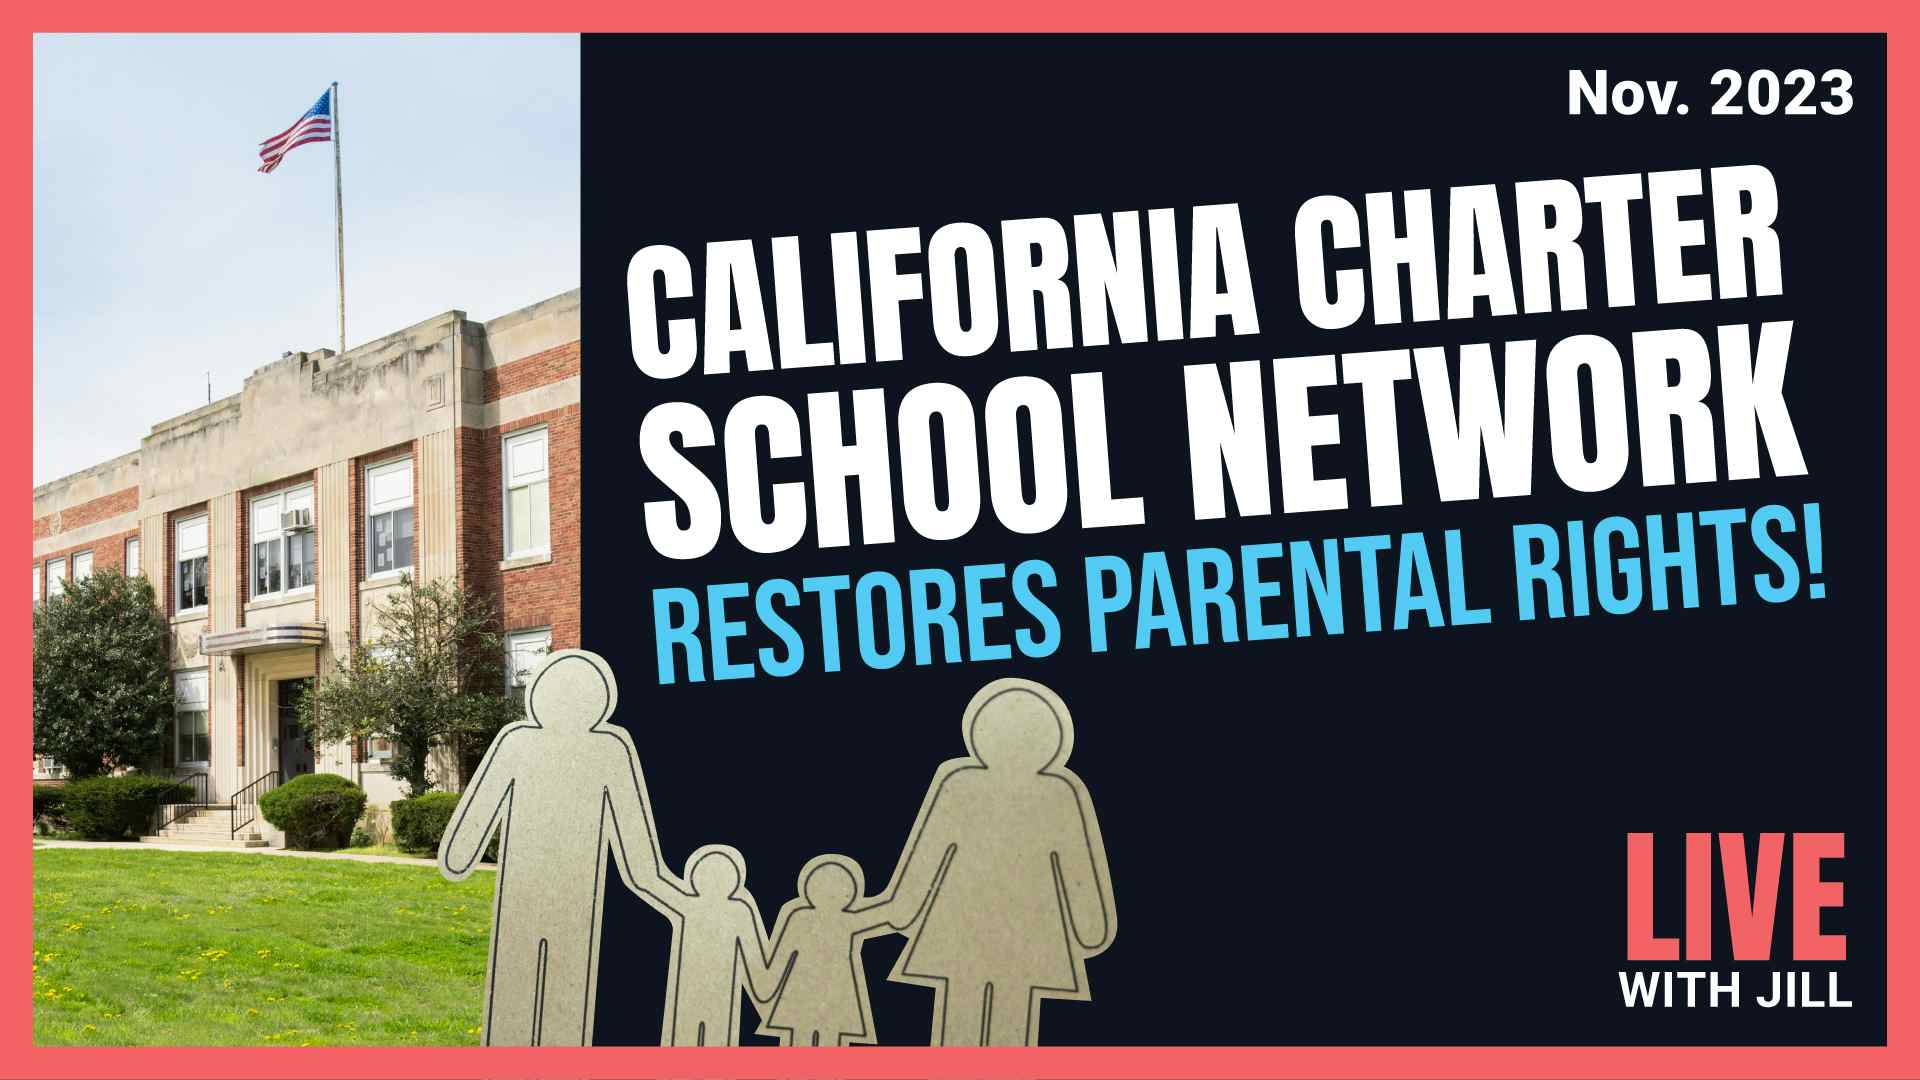 California Charter School Network Restores Parental Rights!